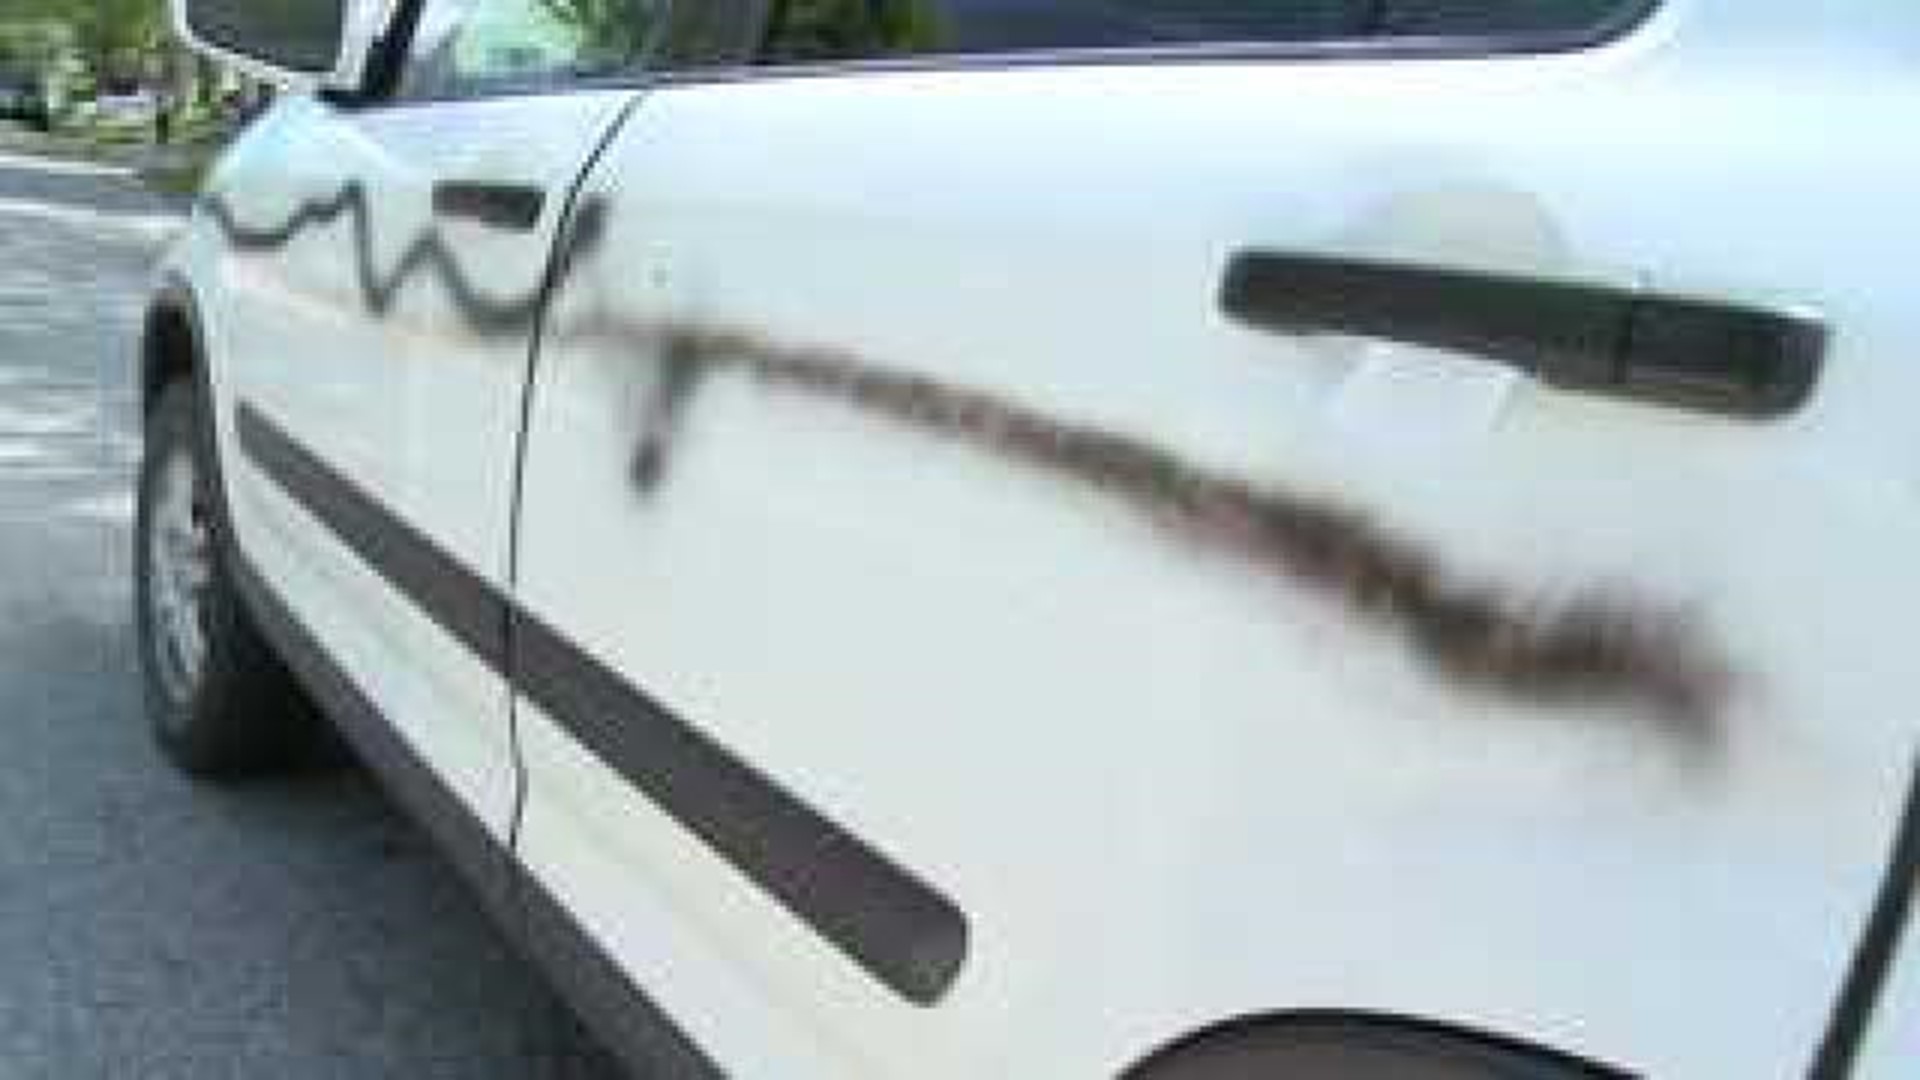 Cars spray painted in Davenport neighborhood